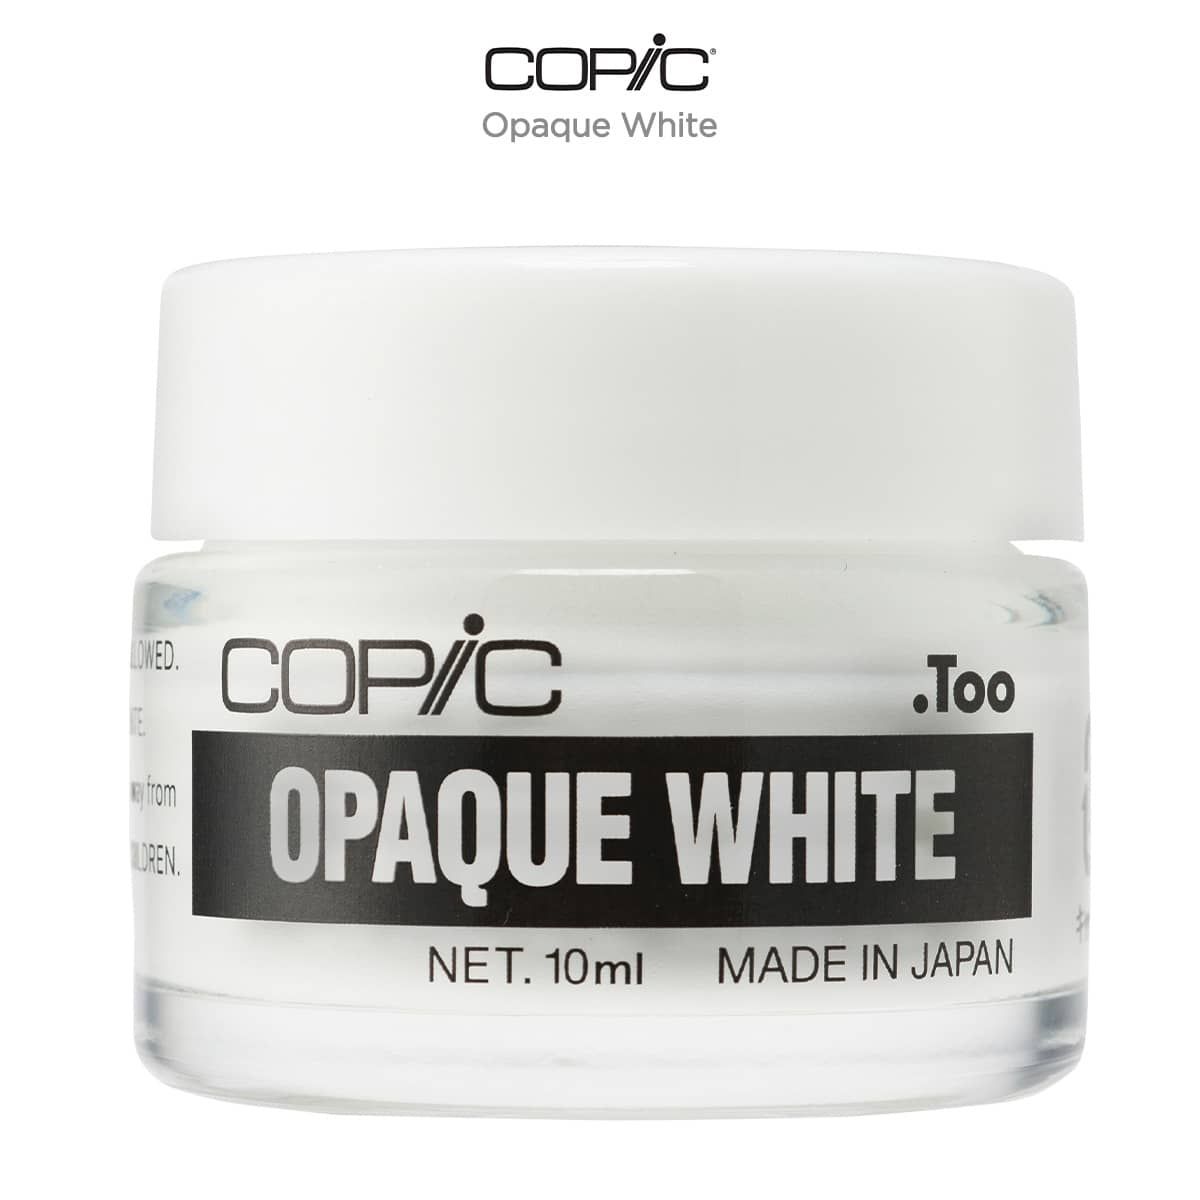 Copic Opaque White